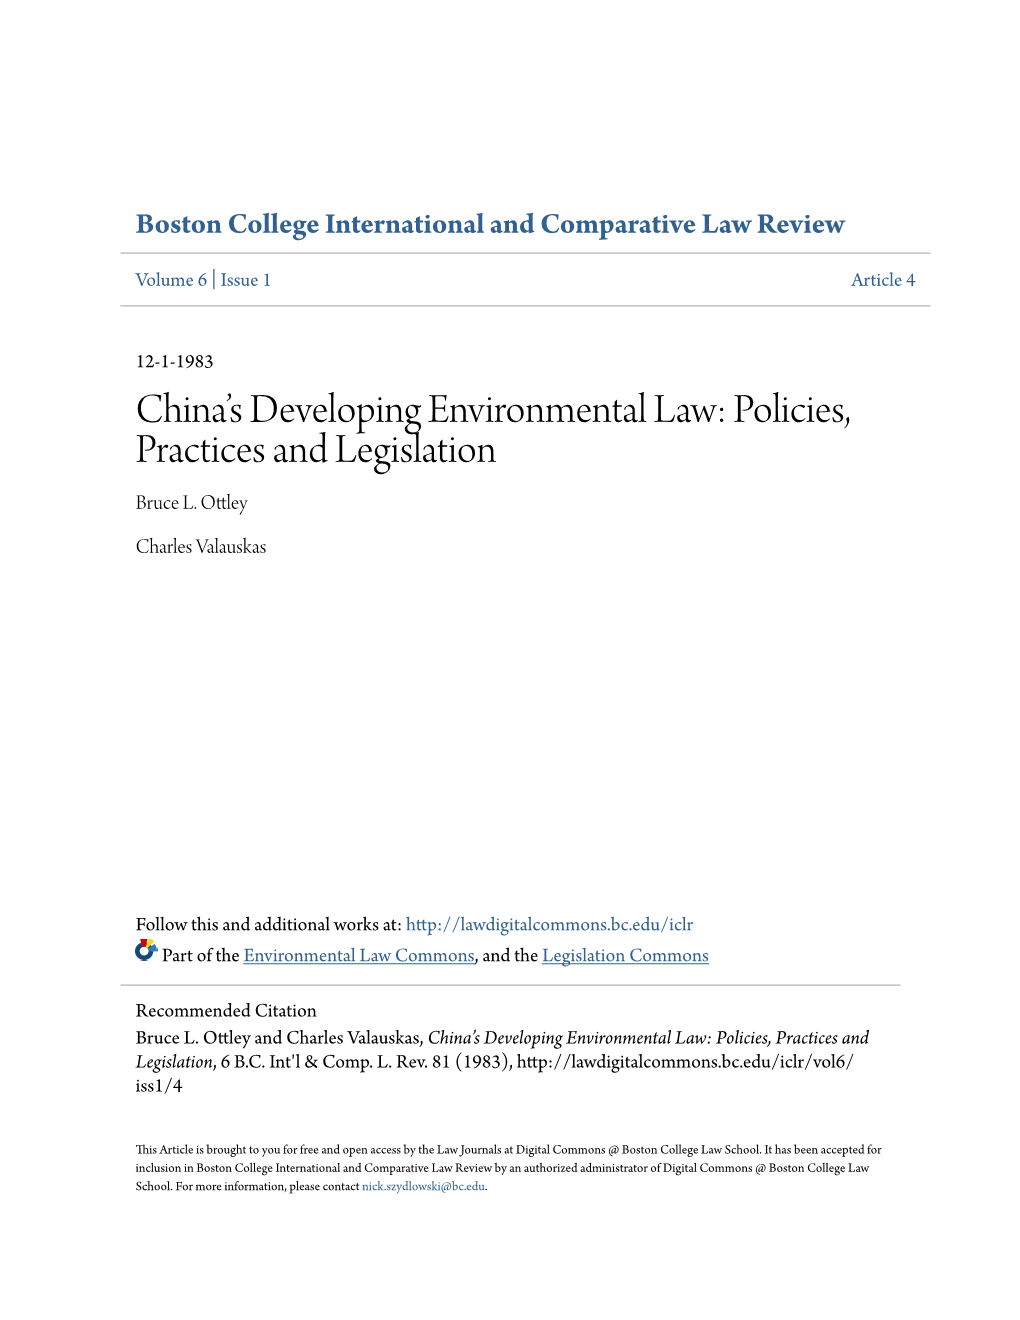 Chinaâ•Žs Developing Environmental